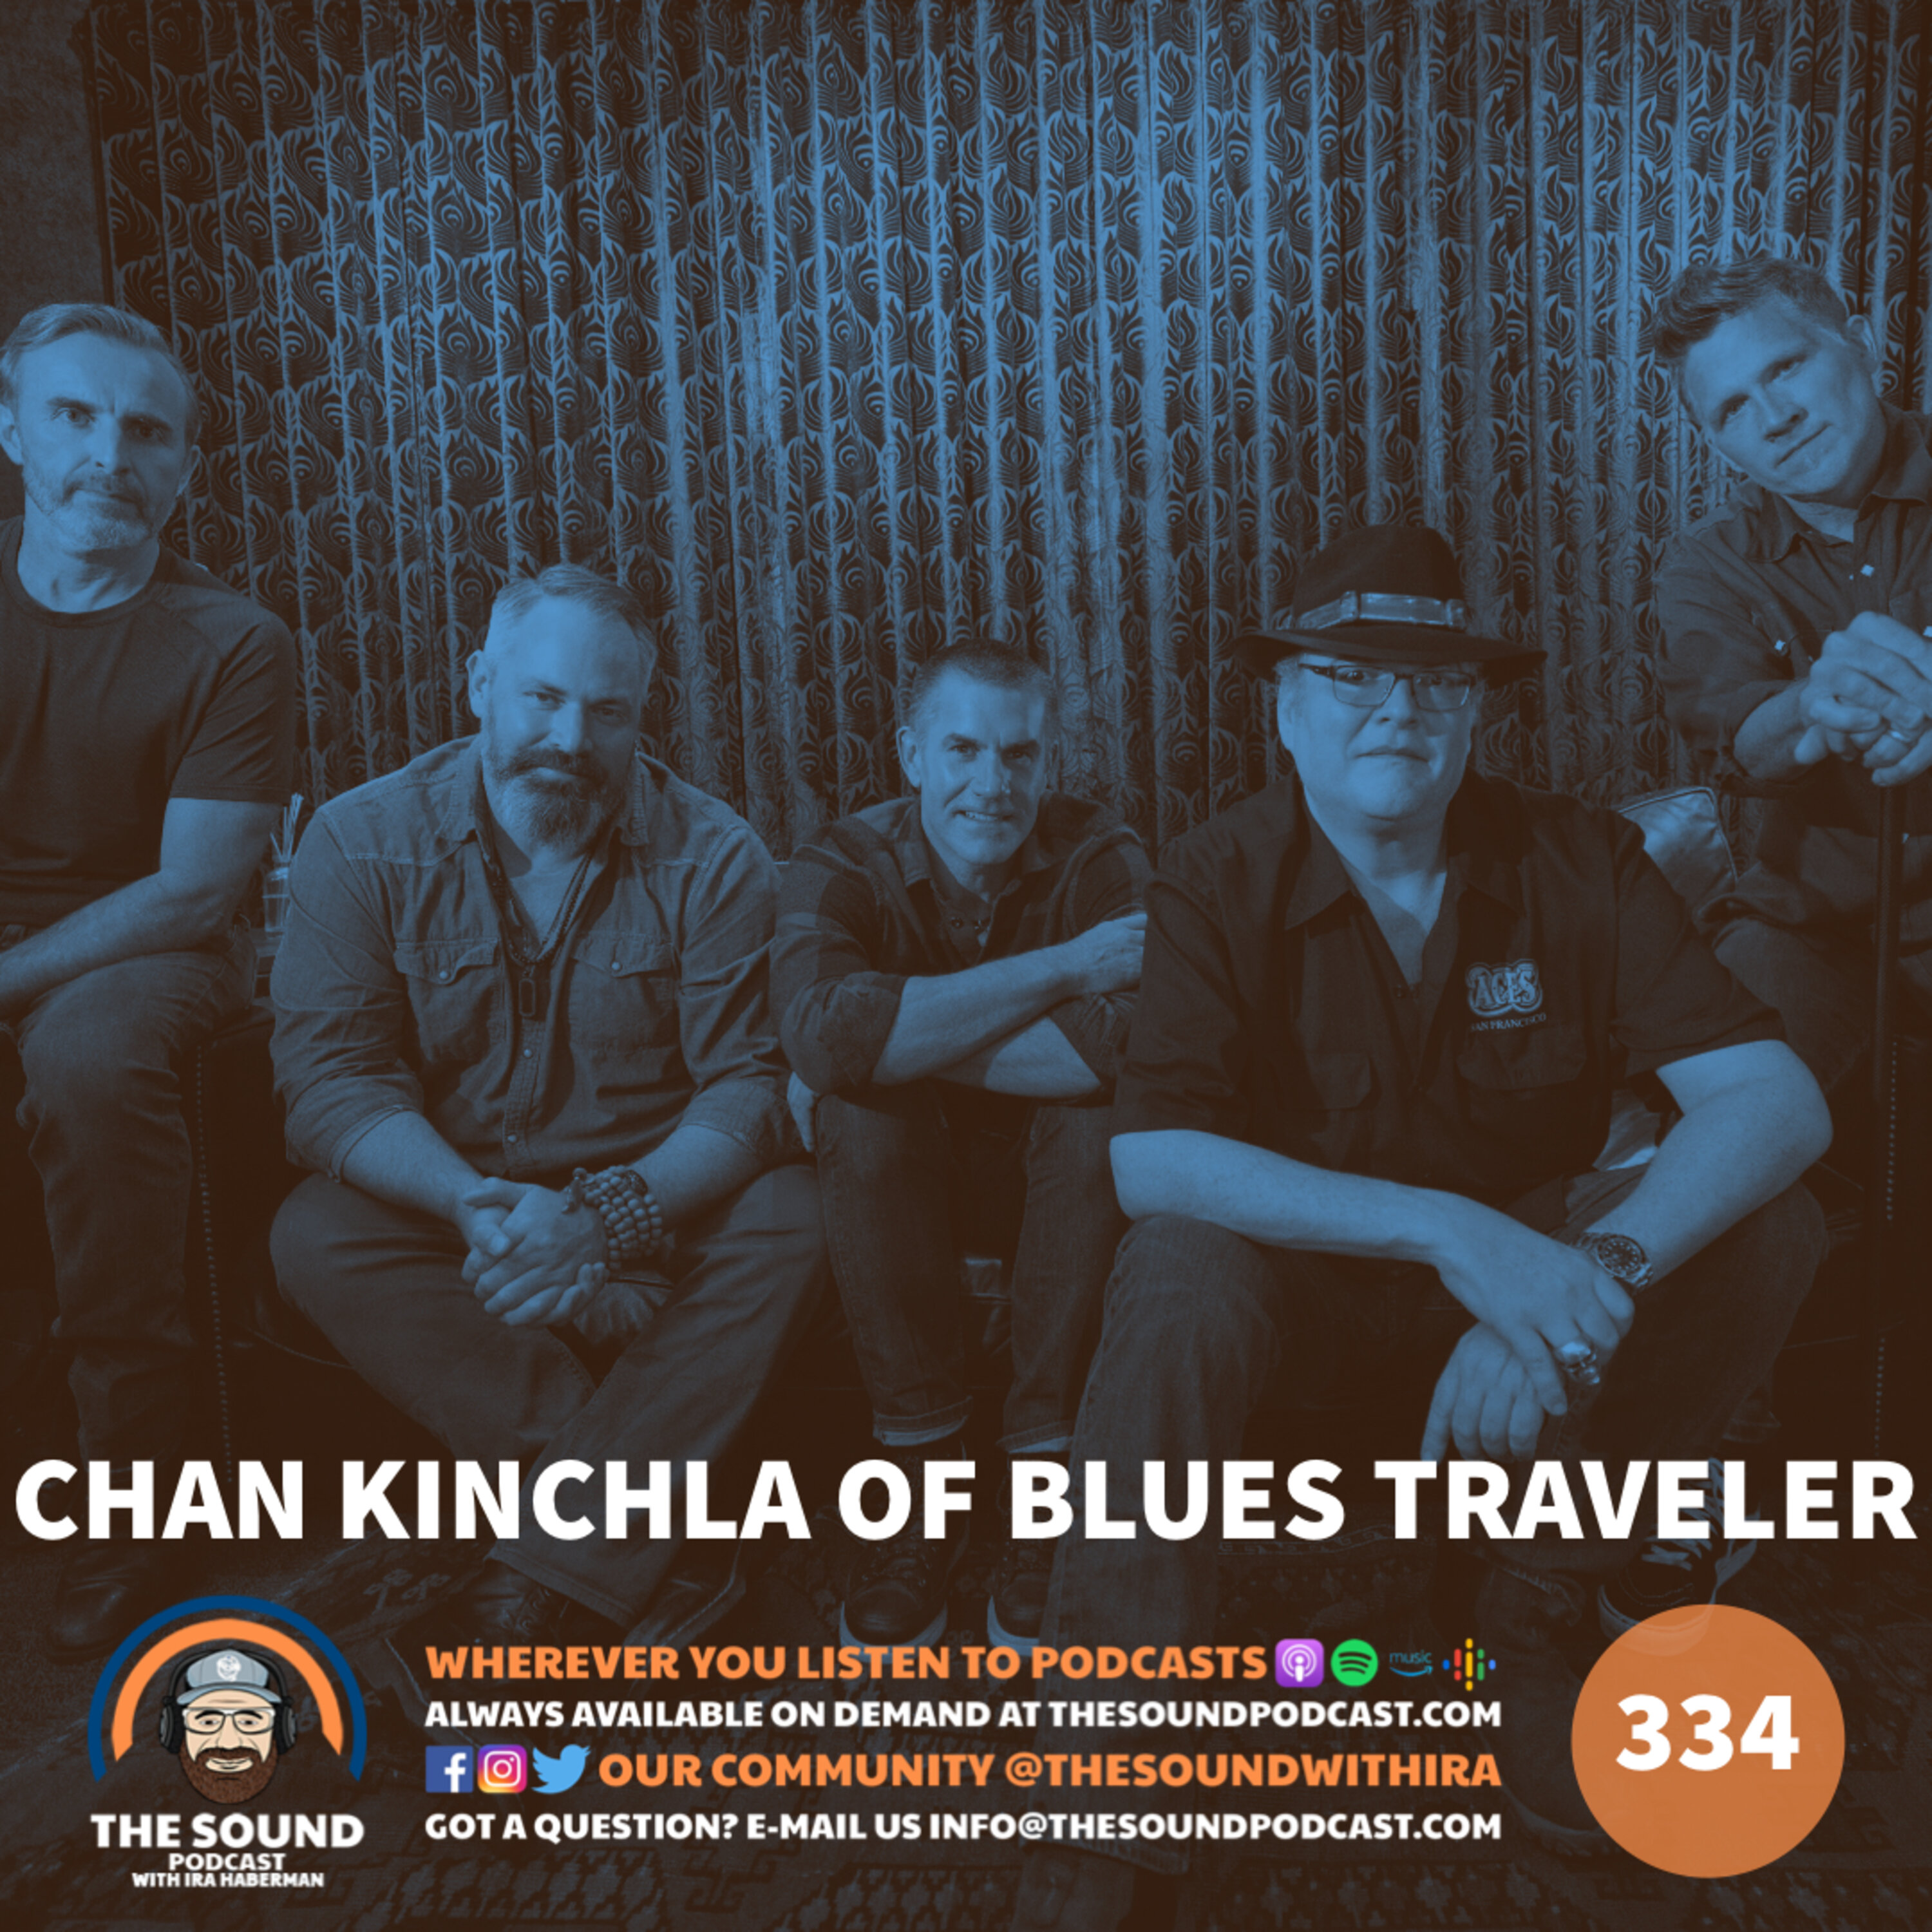 Chan Kinchla of Blues Traveler Image